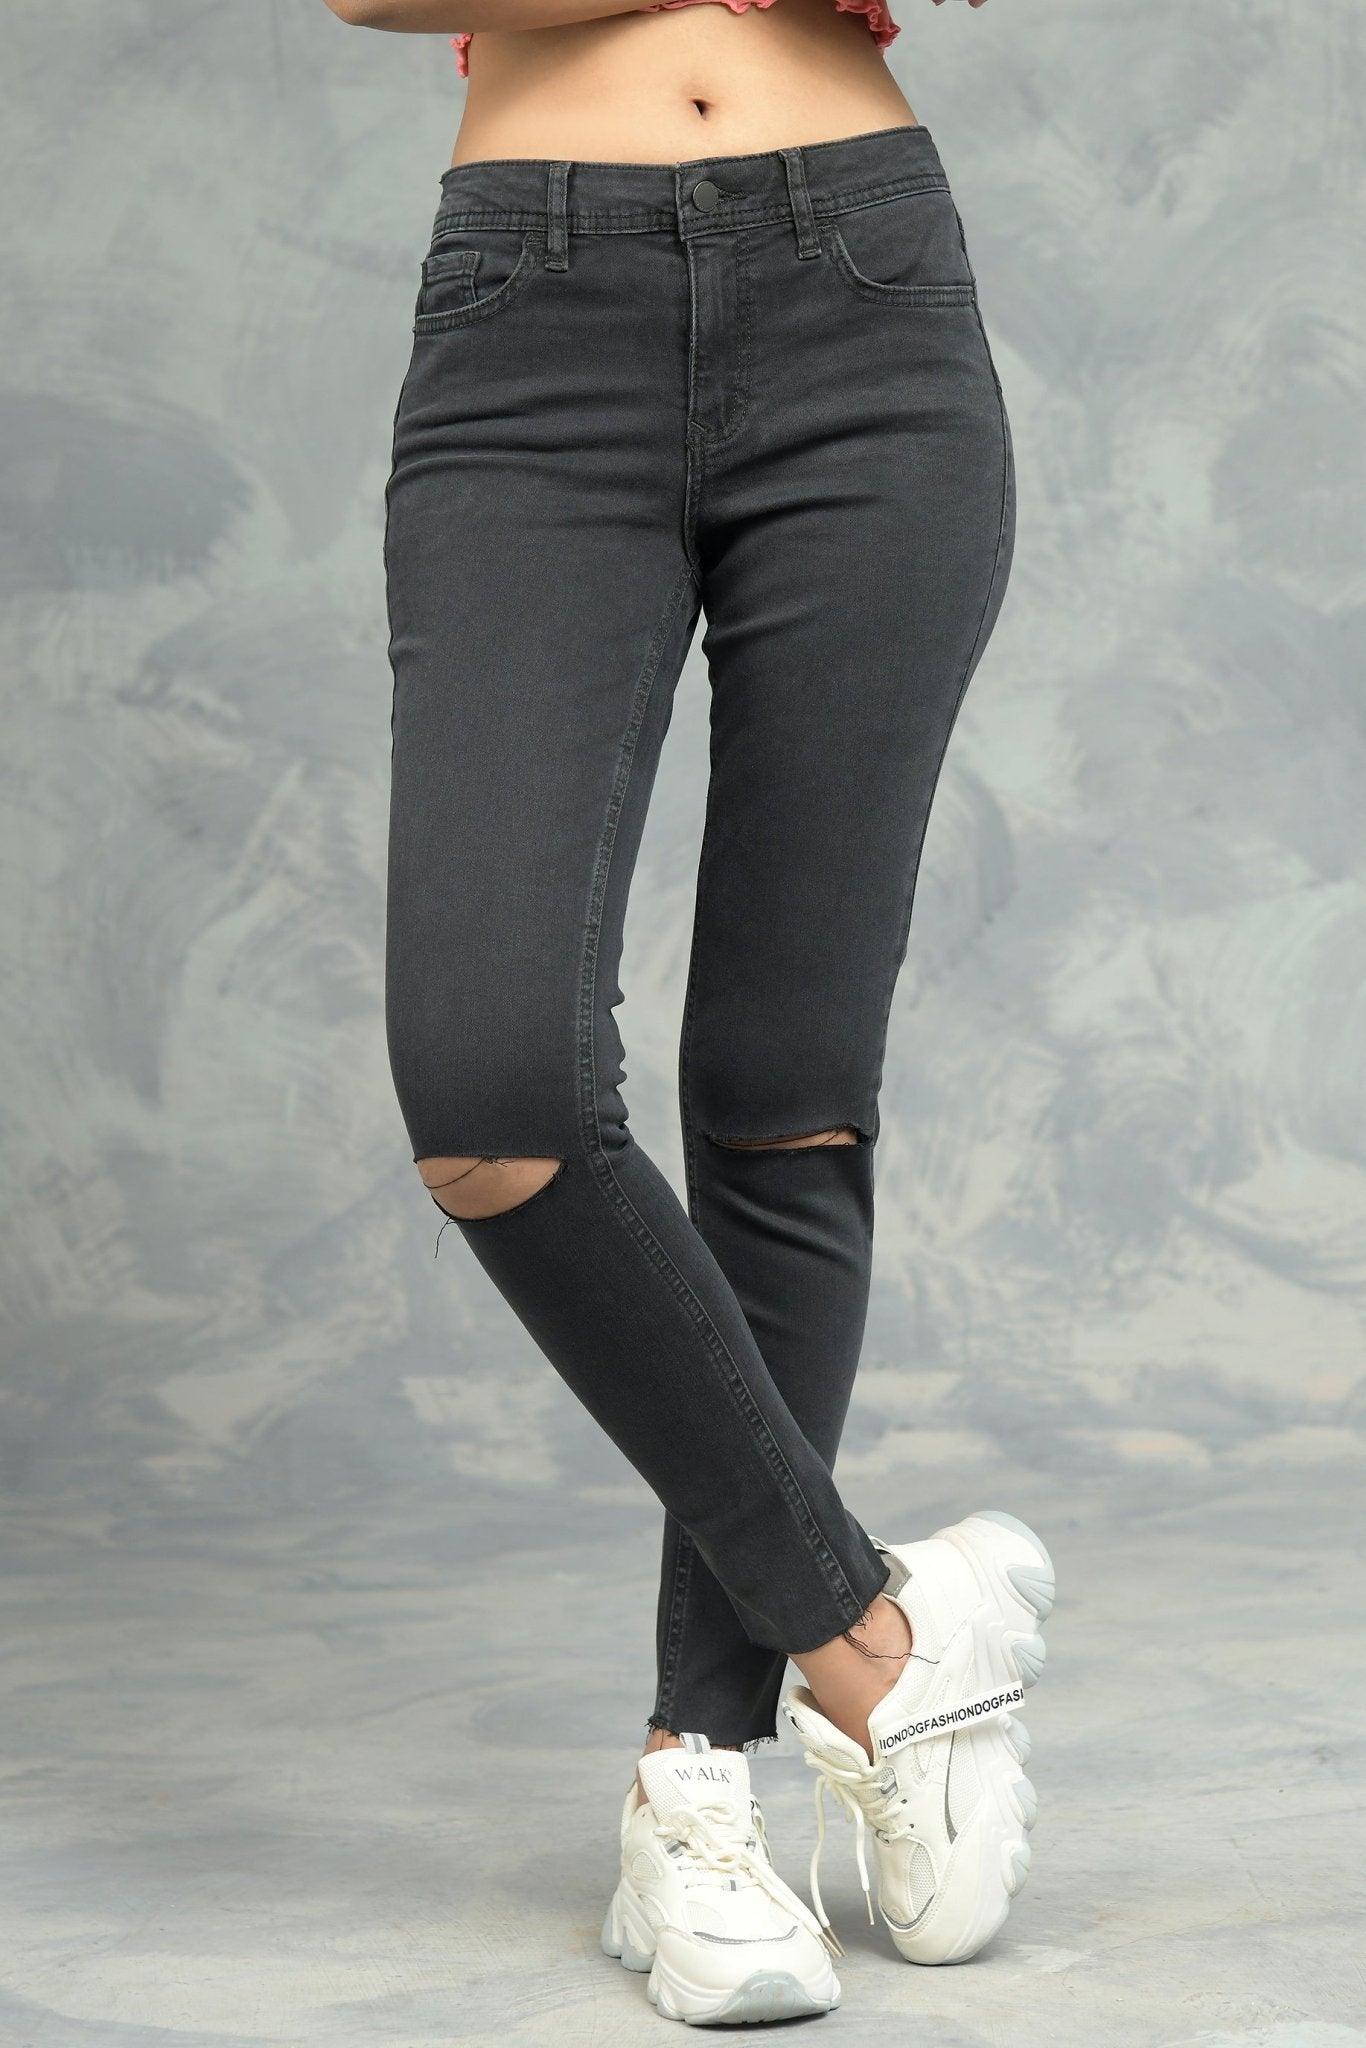 Black Slim Fit Ripped Jeans - Negative Apparel